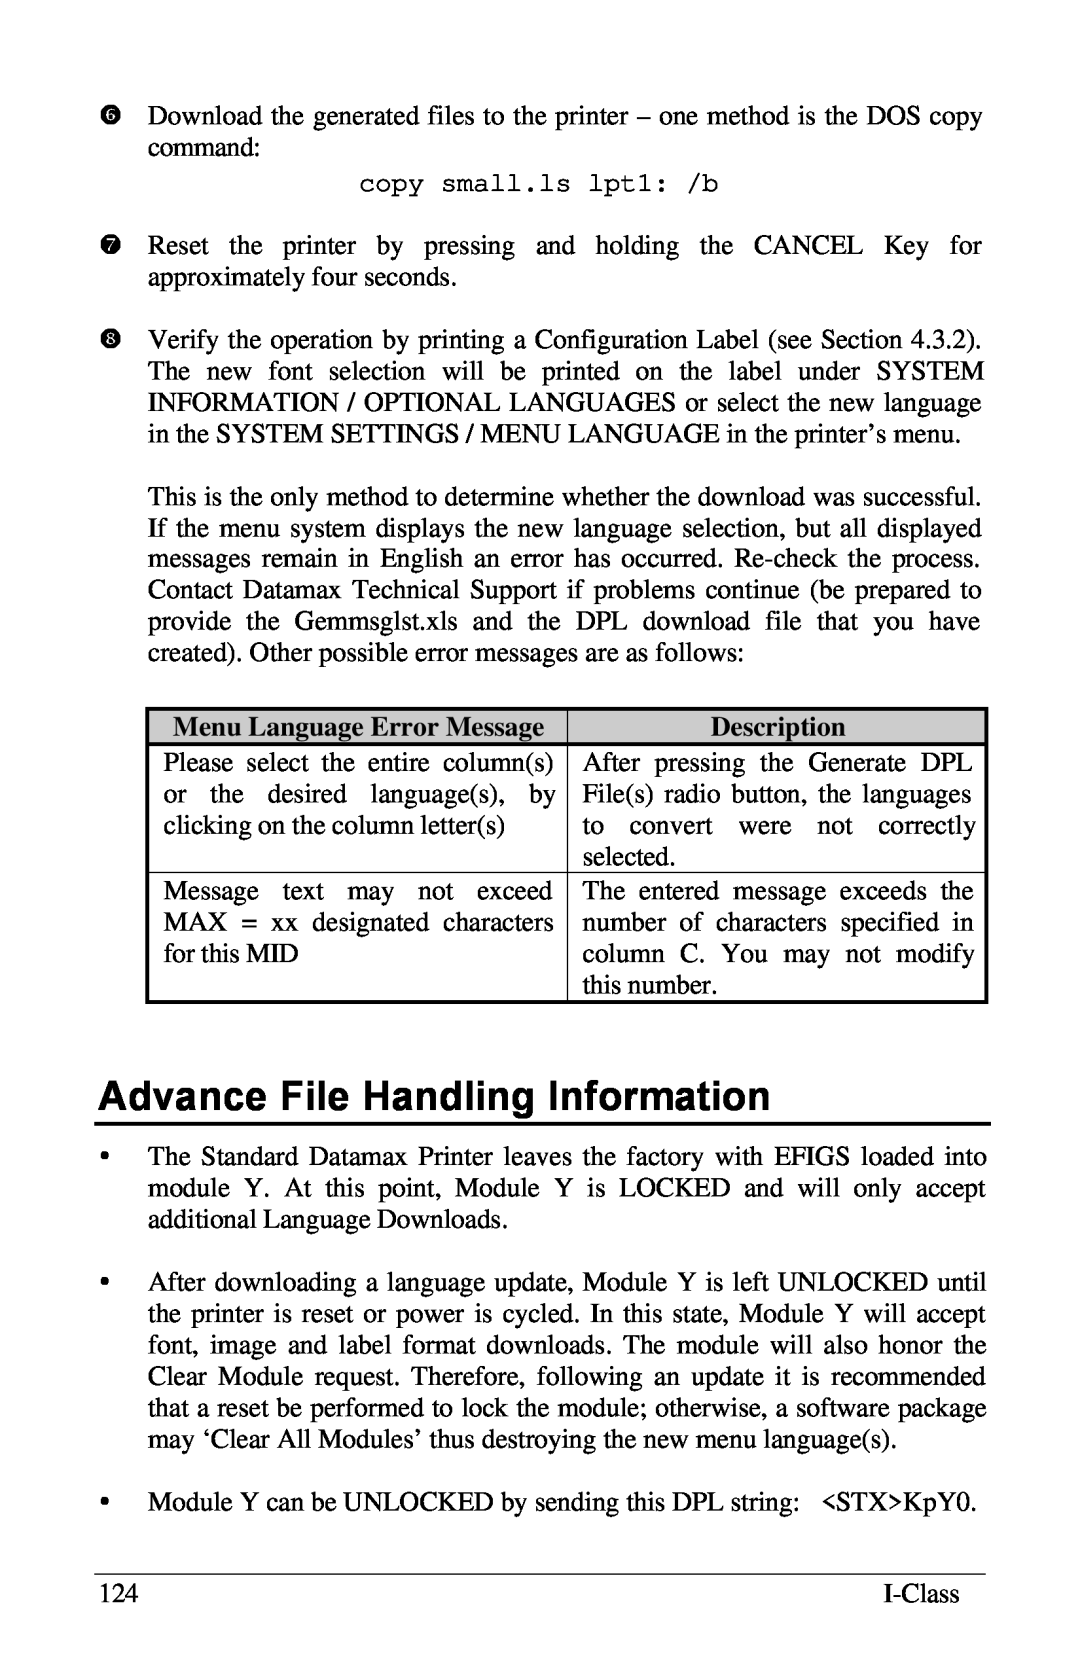 Xerox I Class manual Advance File Handling Information, Menu Language Error Message, Description 